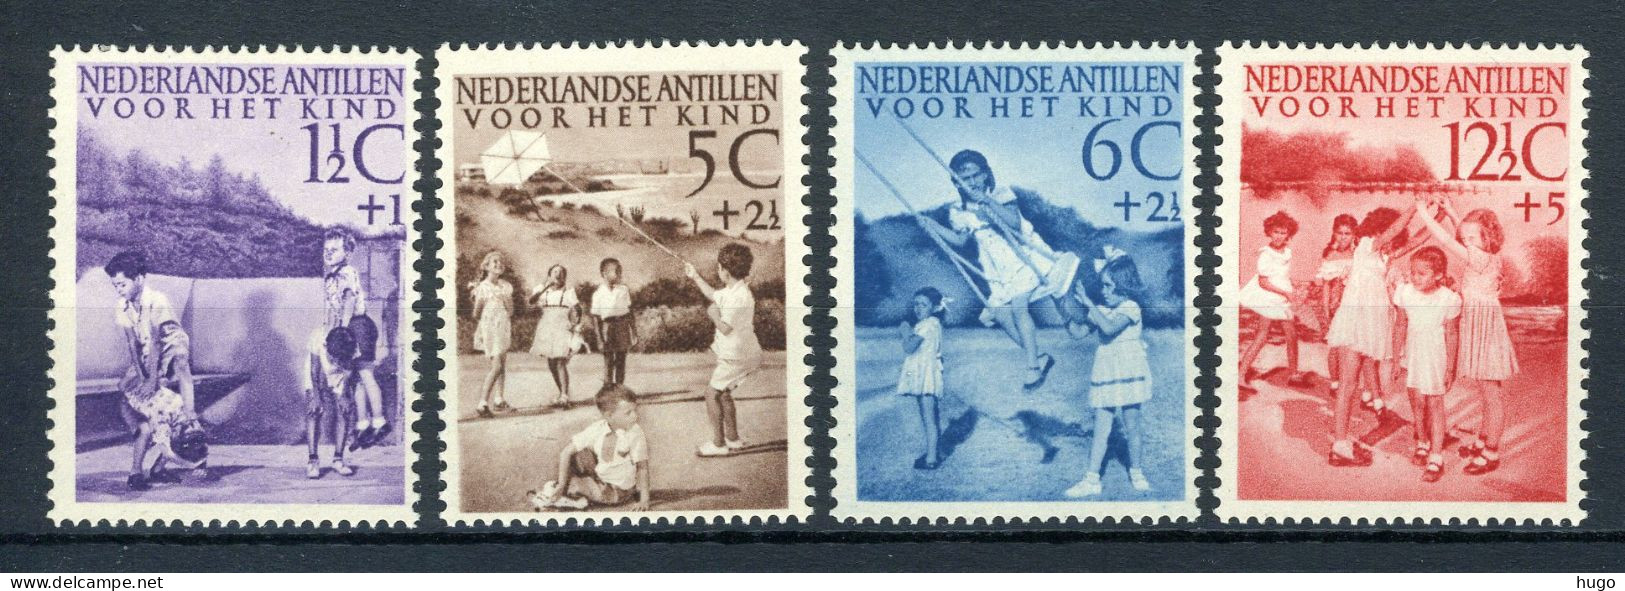 NL. ANTILLEN 234/237 MNH 1951 -Kinderzegels, Kinderspelen. - Curaçao, Antille Olandesi, Aruba